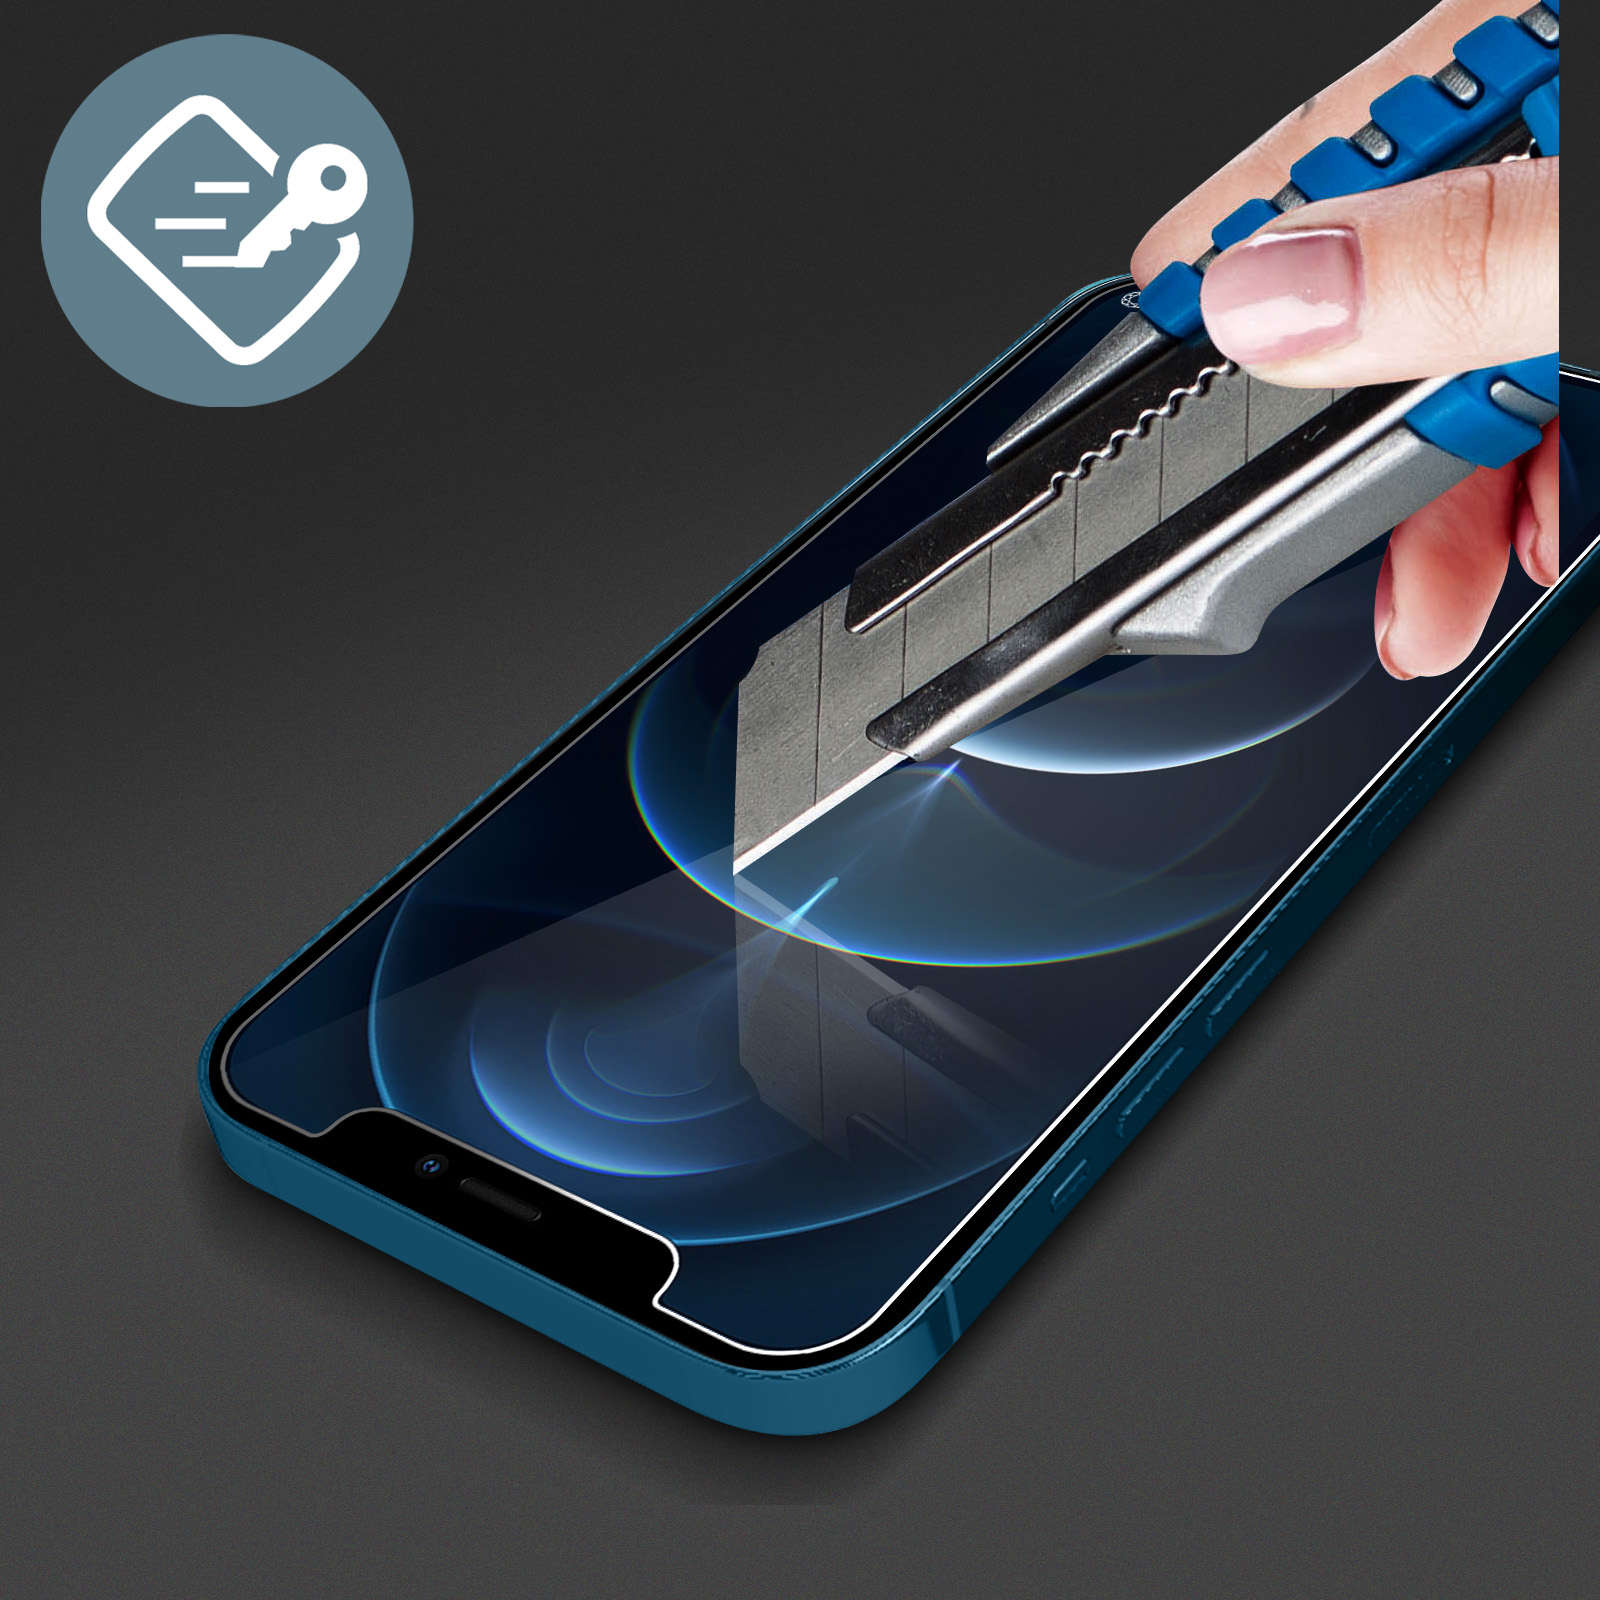 Cristal templado Force Glass con Garantía de por vida - Transparente p. iPhone  X, XS, 11 Pro - Spain